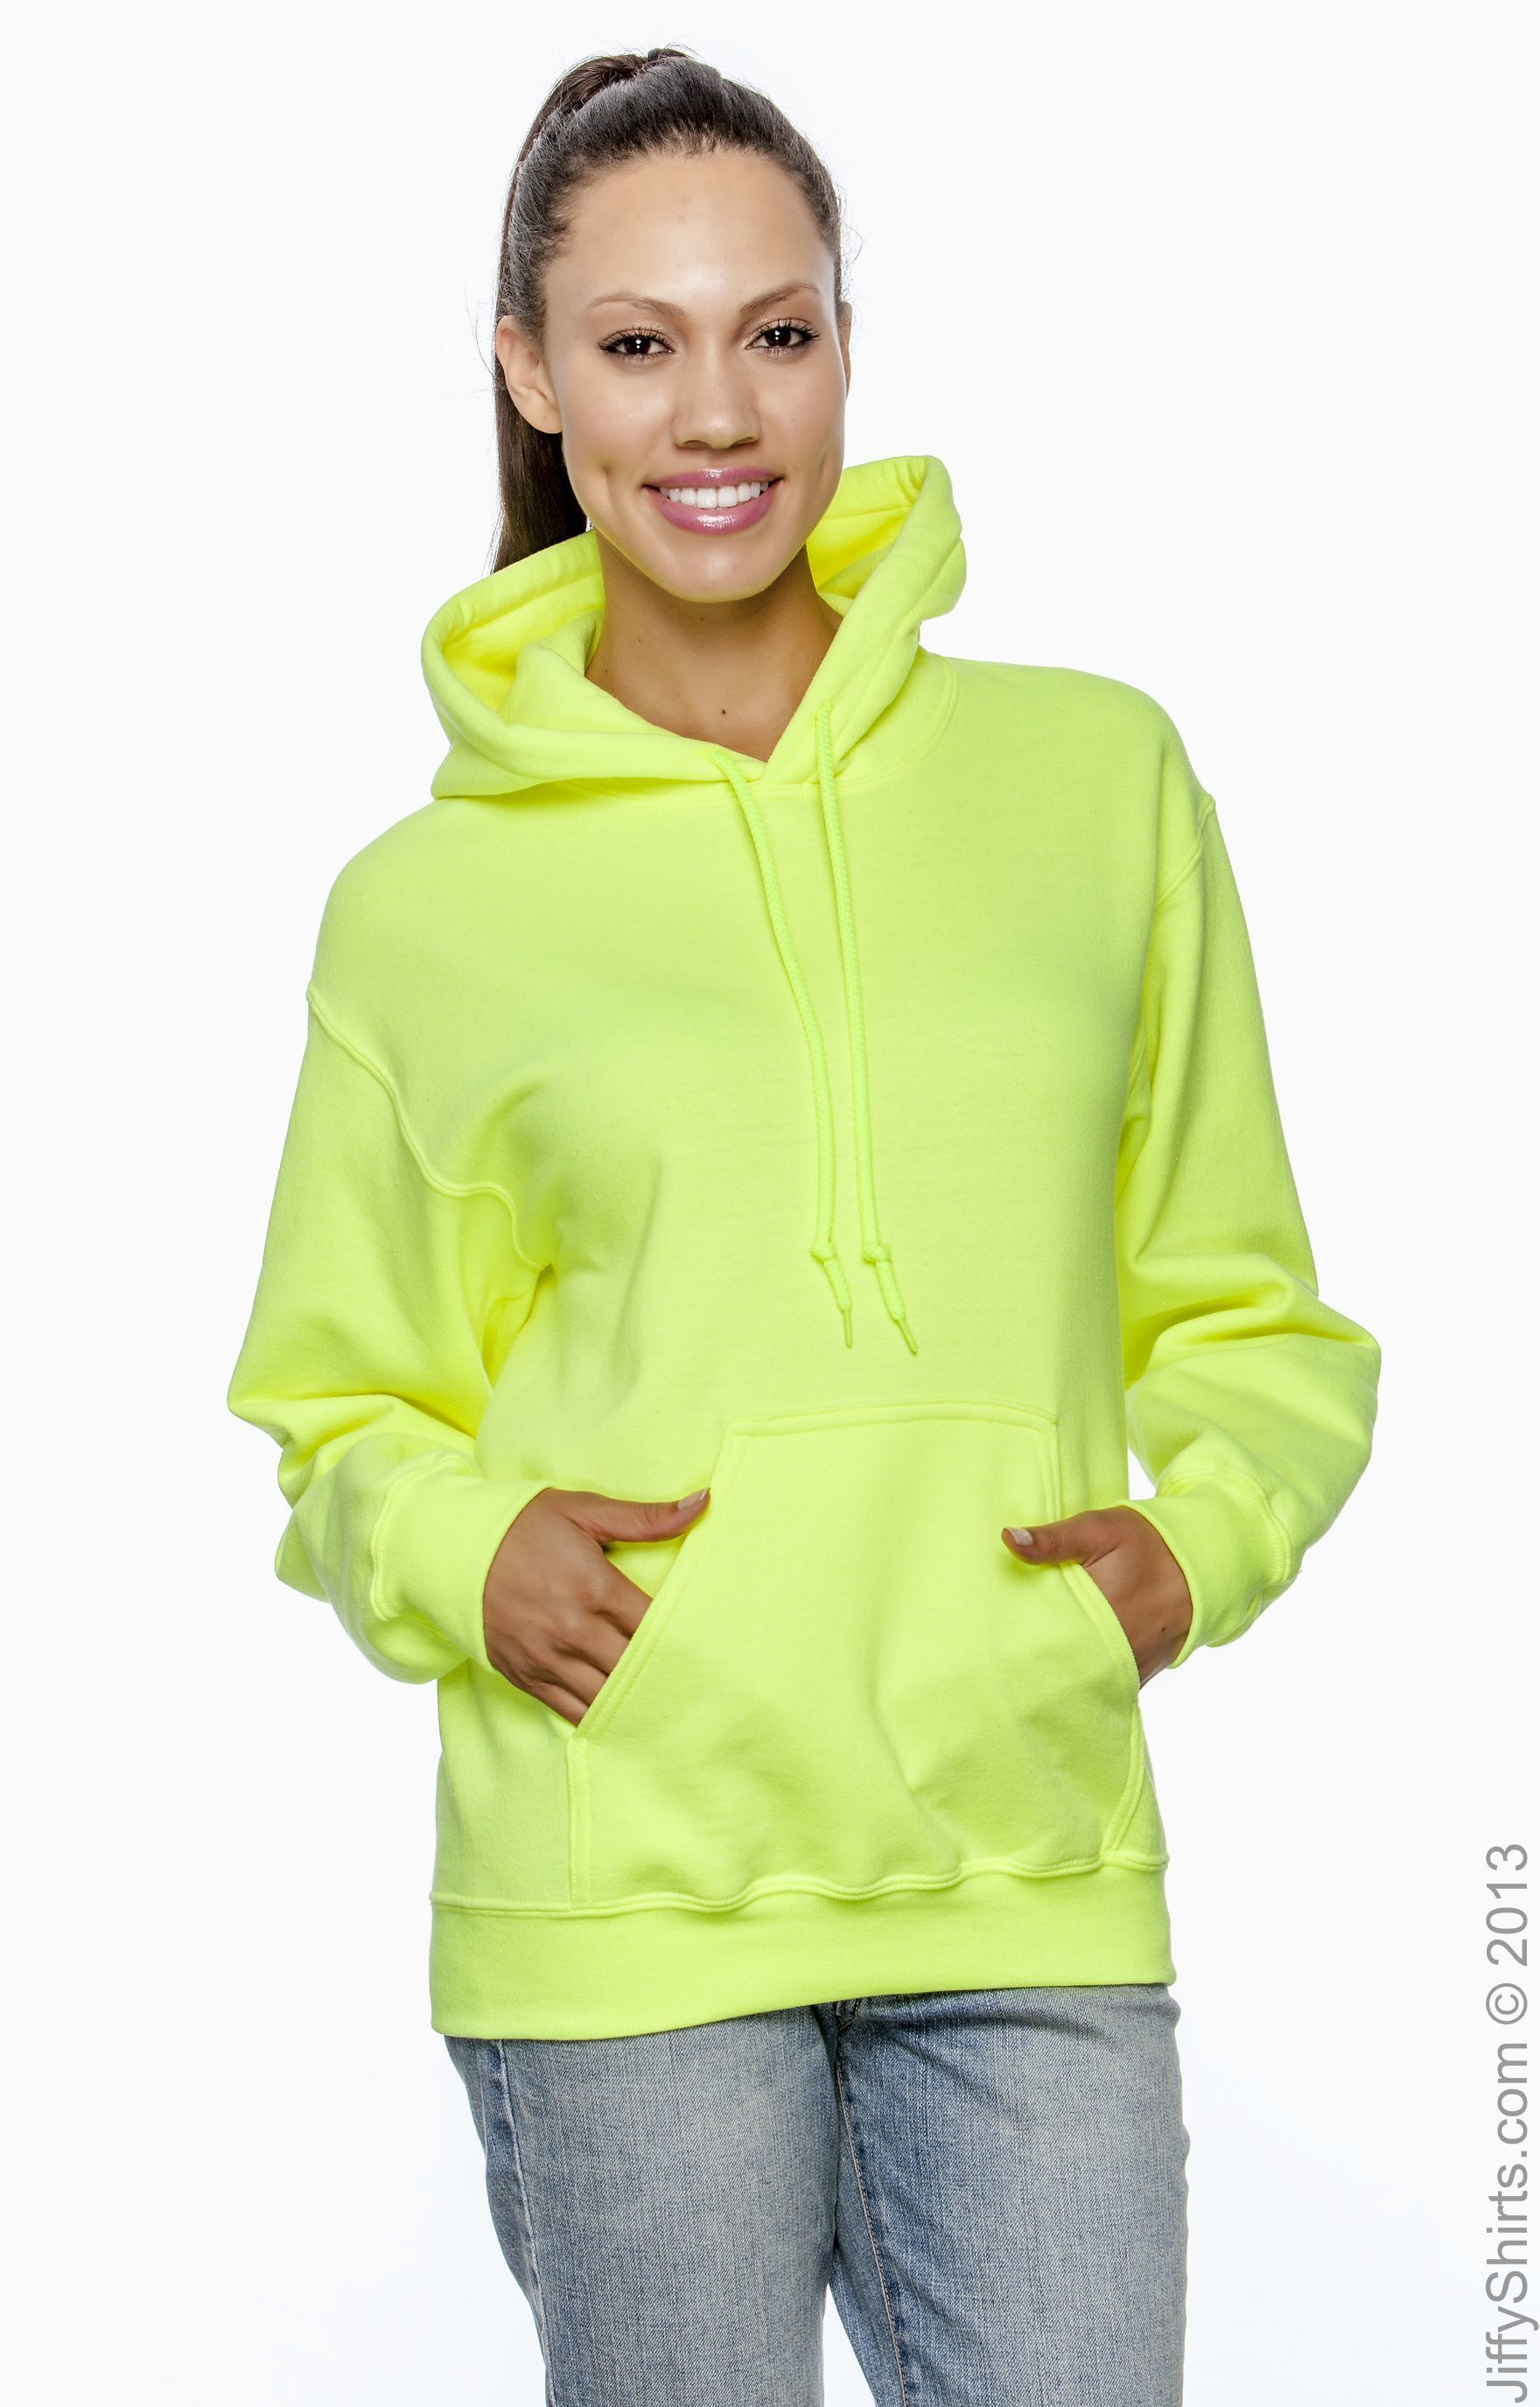 Gildan Adult DryBlend Performance Hooded Sweatshirt Sfty Green